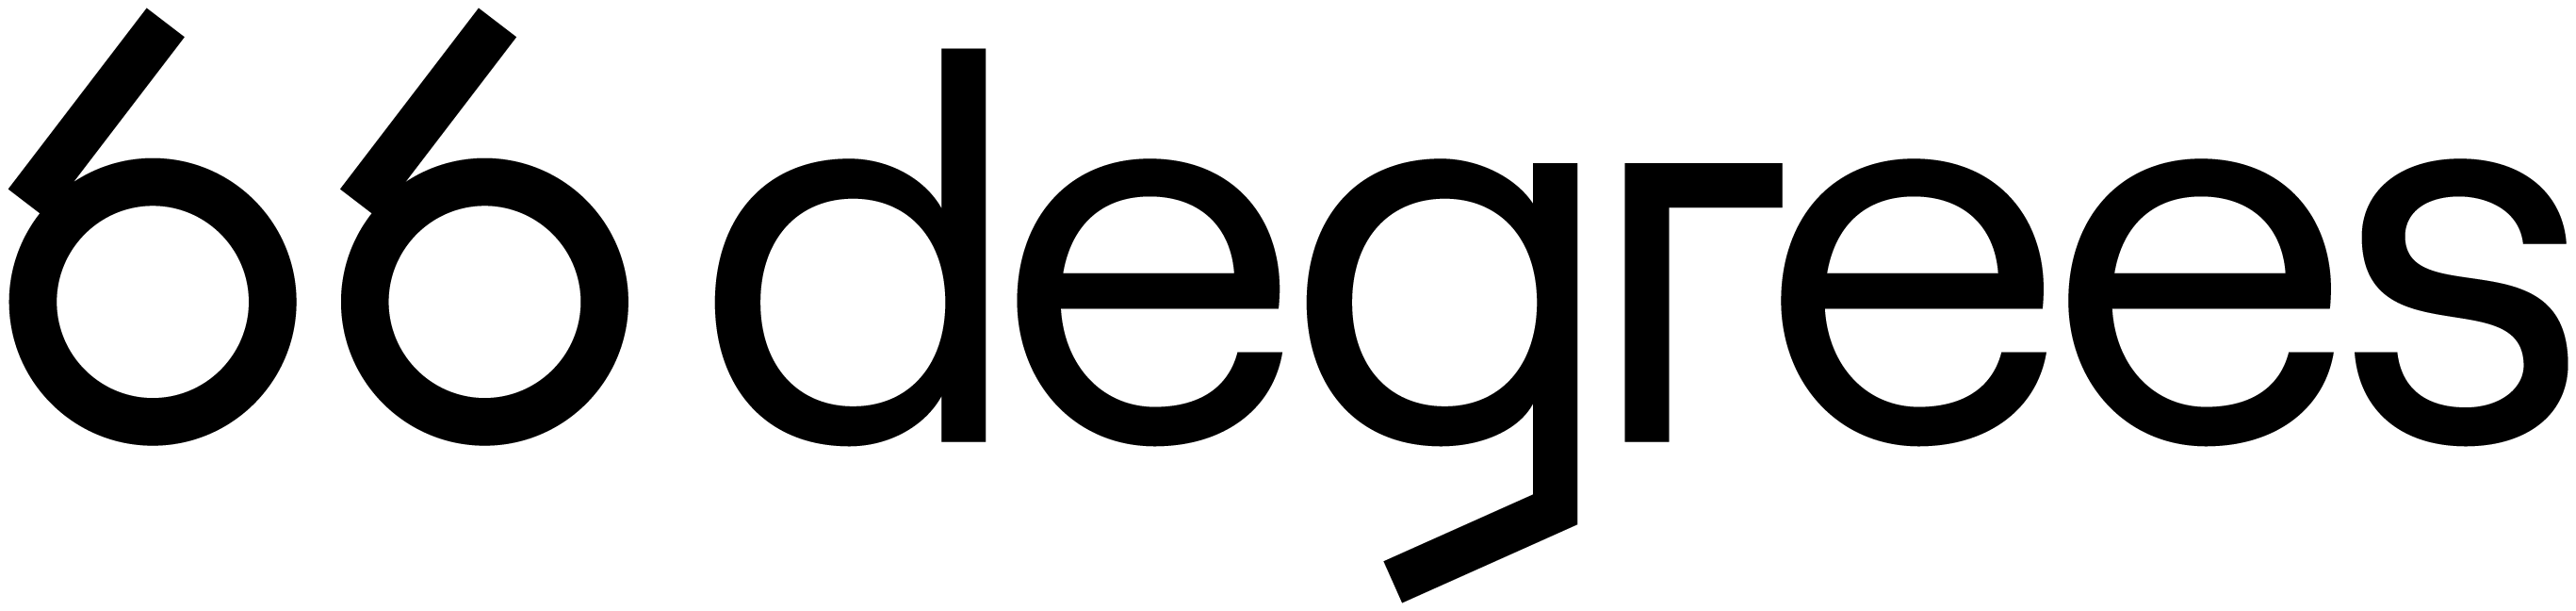 66Degrees Logo